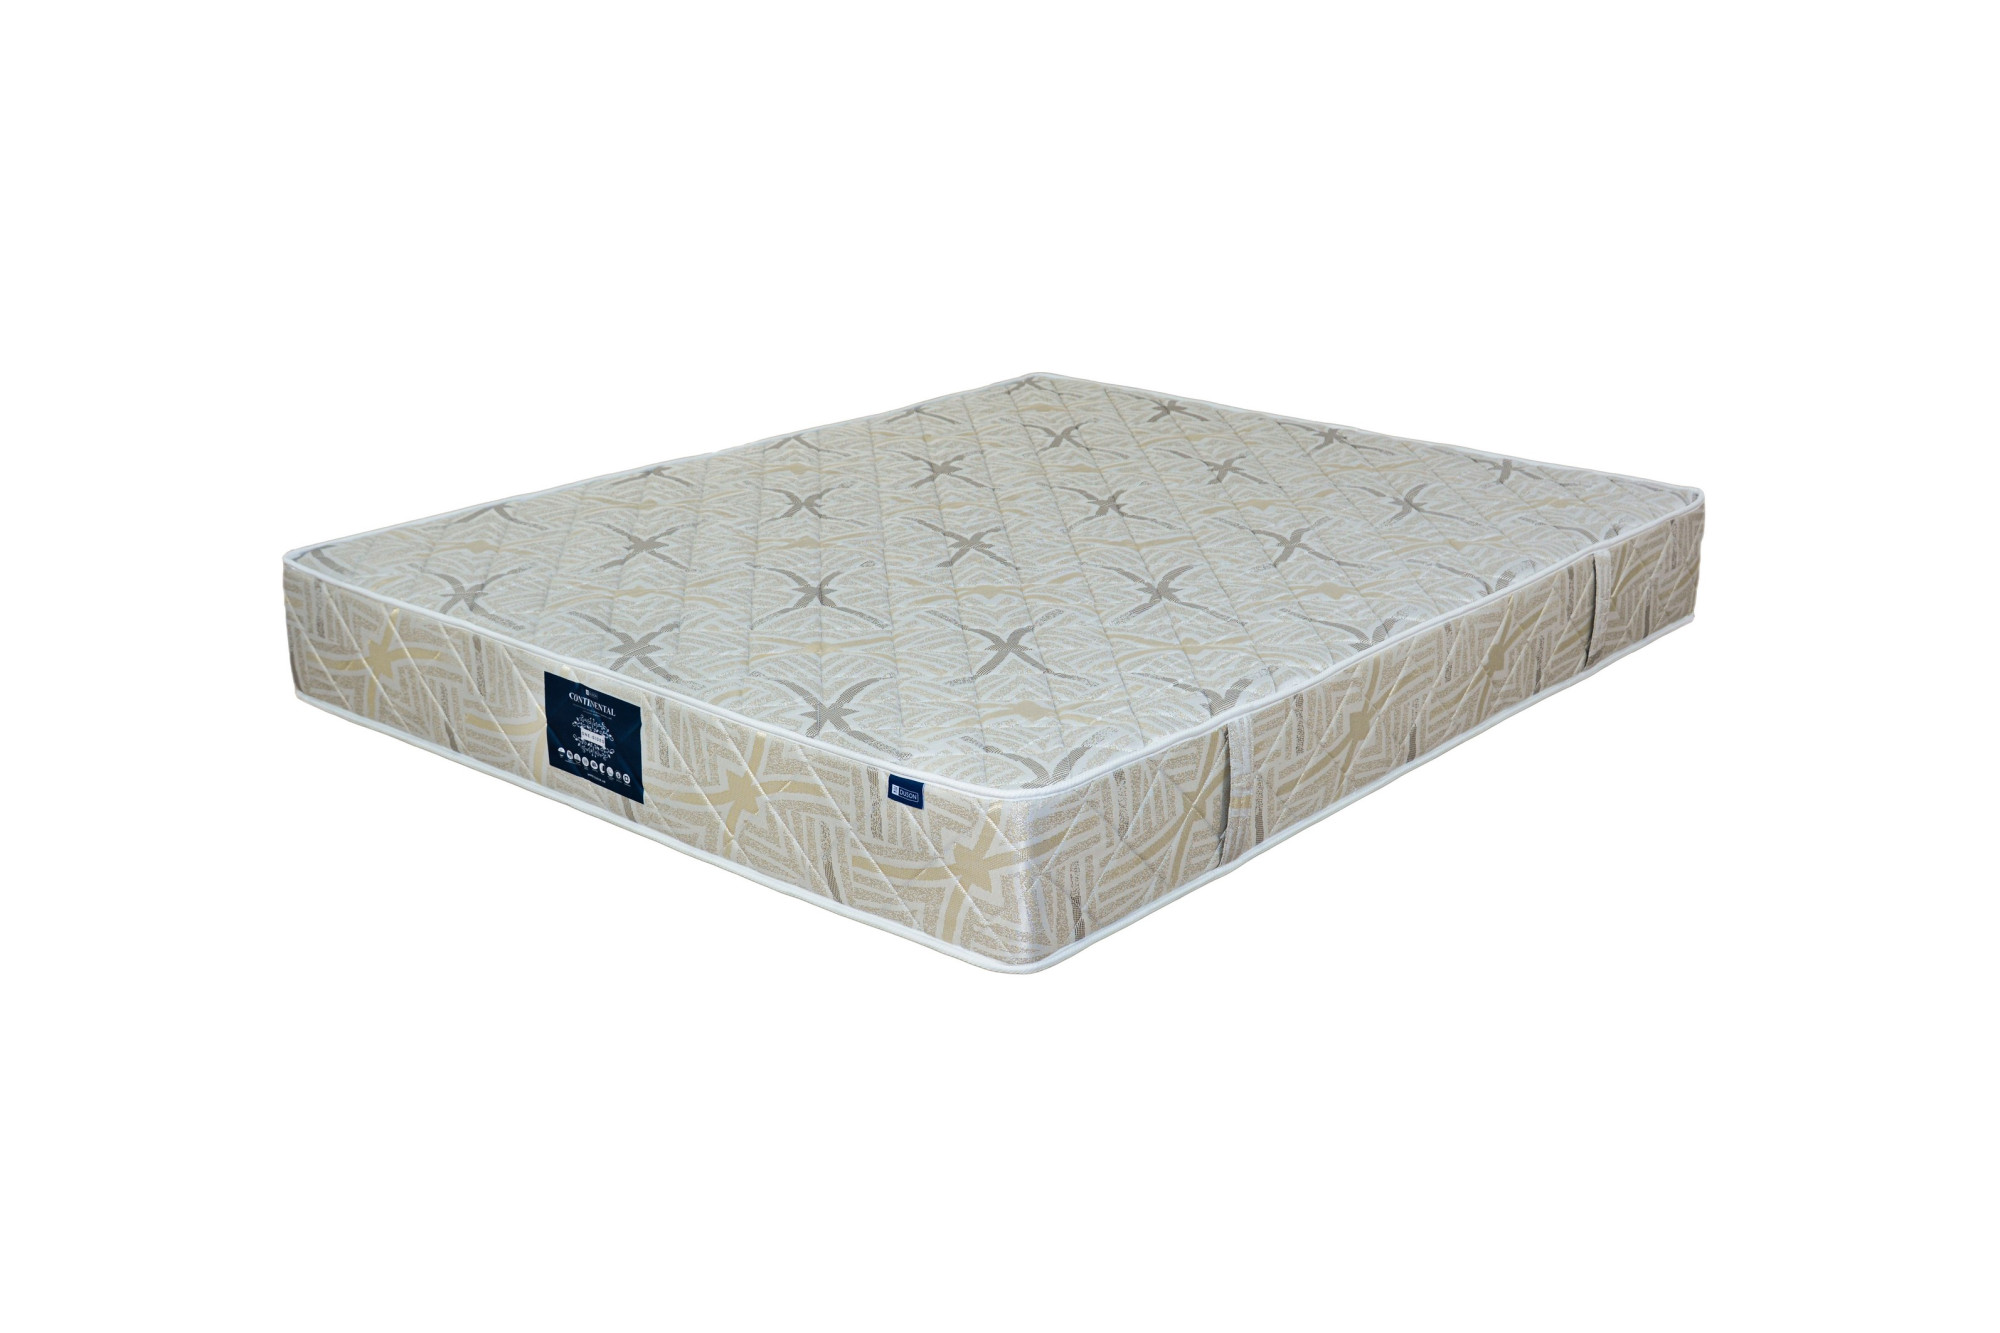 Orthopedic mattress Continental One-sided 160x190 soft, 25cm